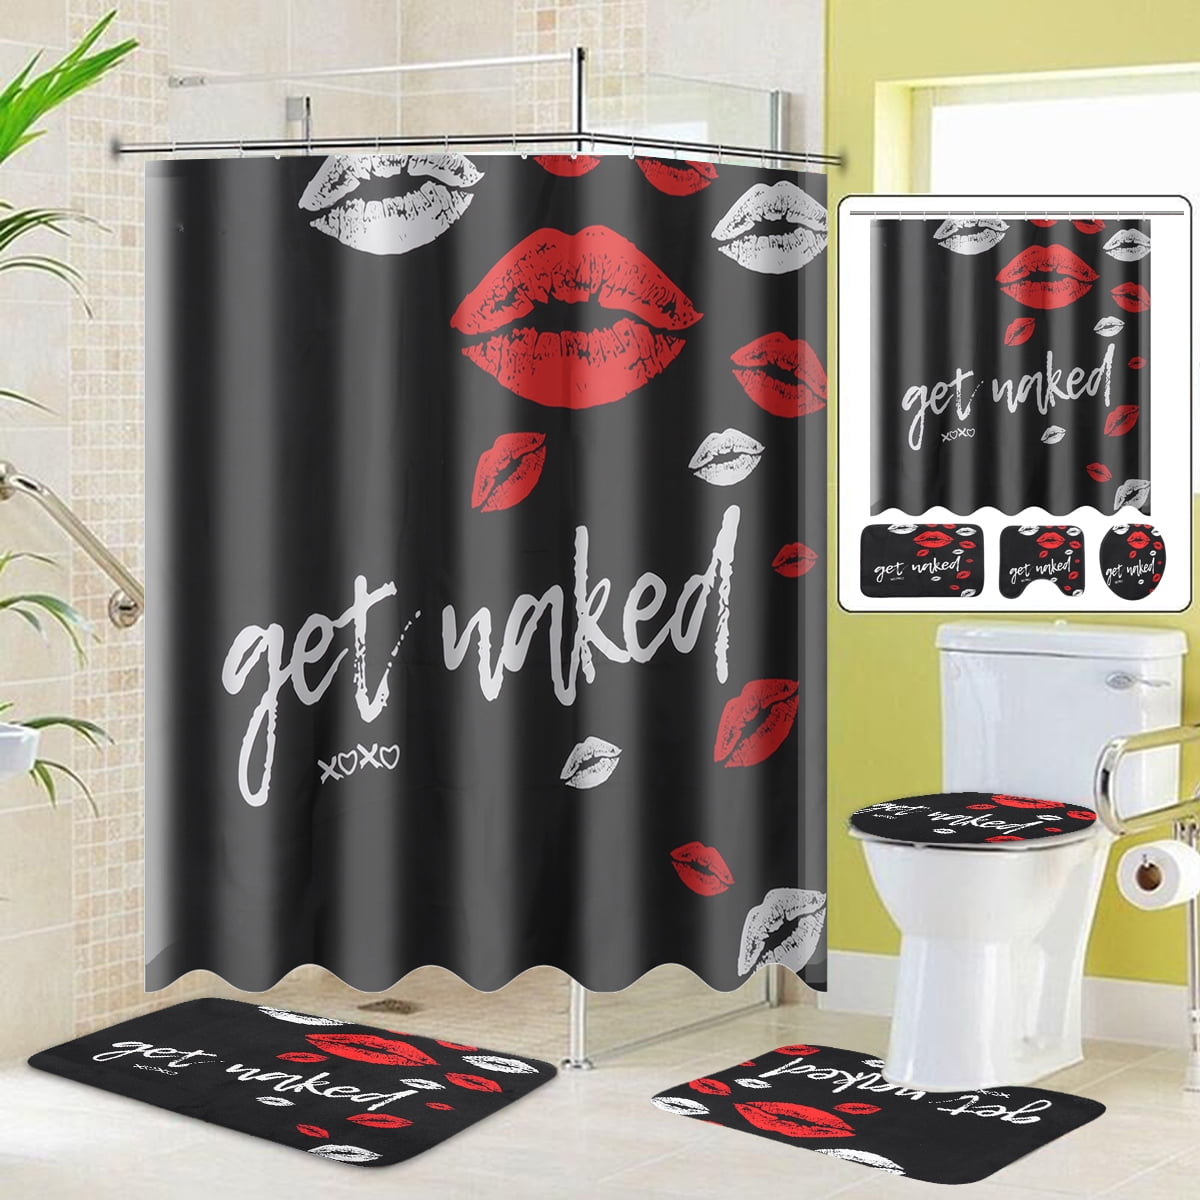 Get Naked Shower Curtain Bath Mat Toilet Cover  Bathroom SET Decor Waterproof 